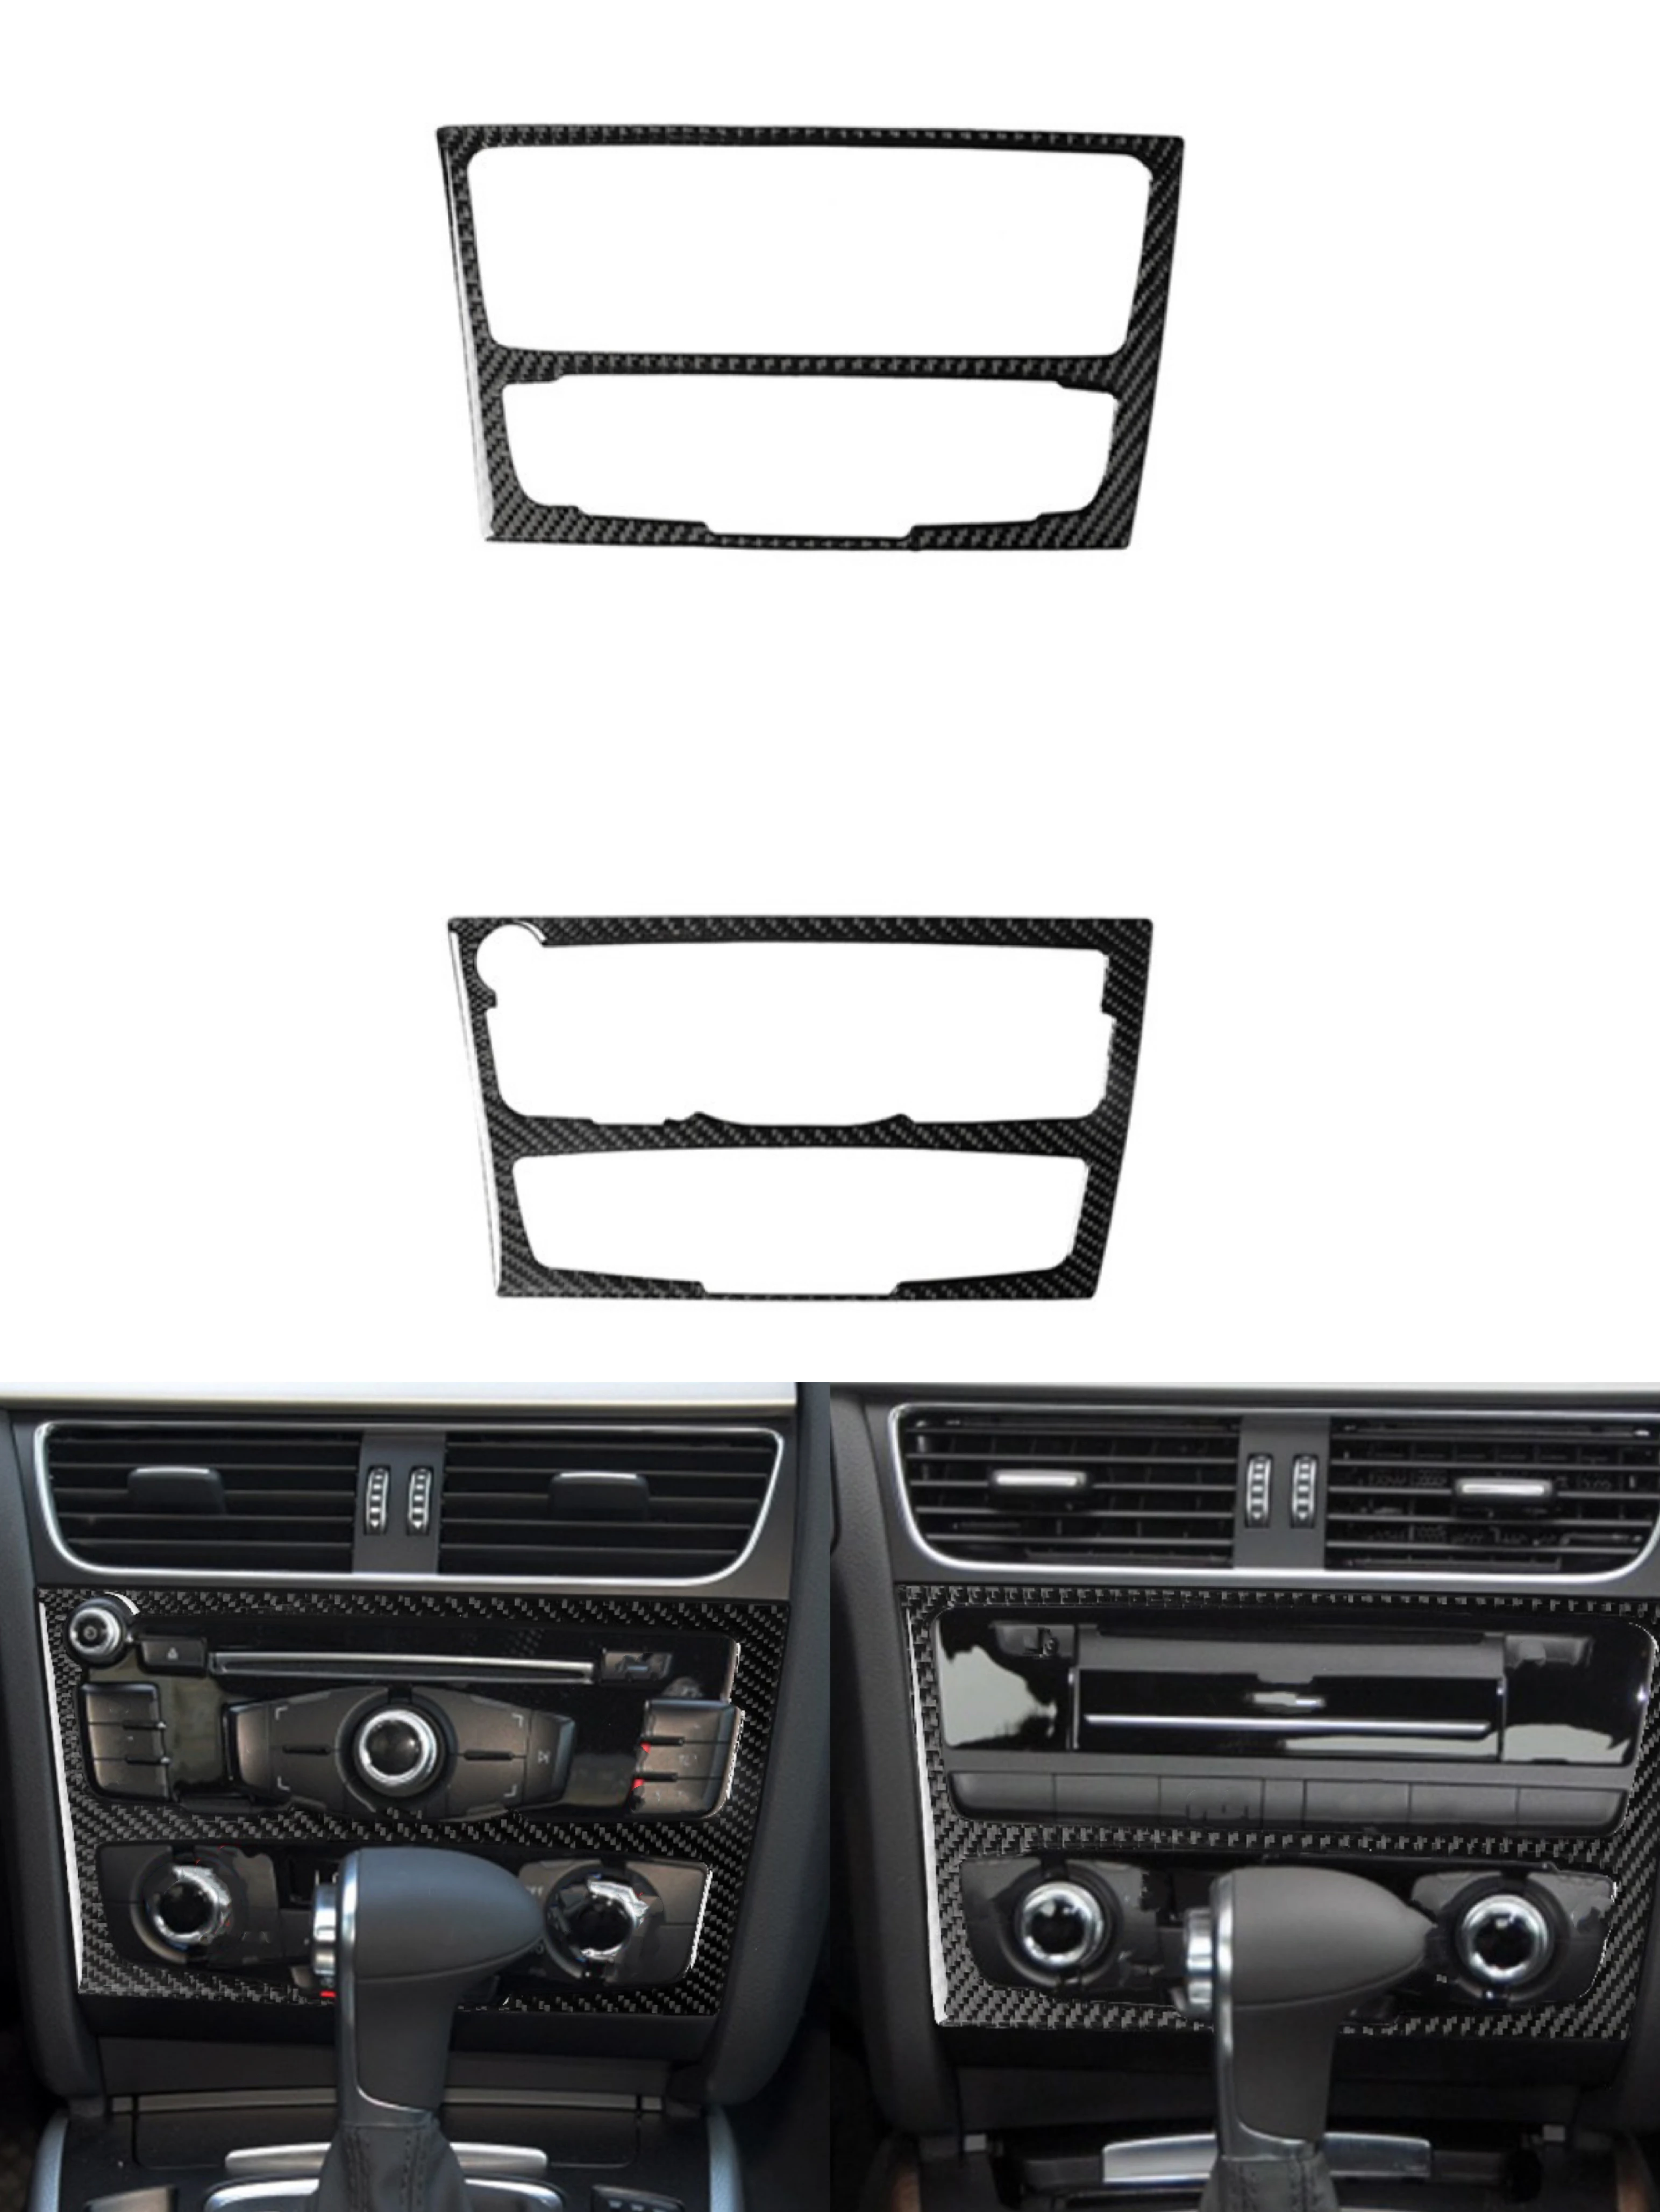 

For Audi A4 B8 A5 2009-2016 Q5 8R Car Central Control CD Panel Decoration Trim Sticker Cover Interior Accessories Carbon Fiber